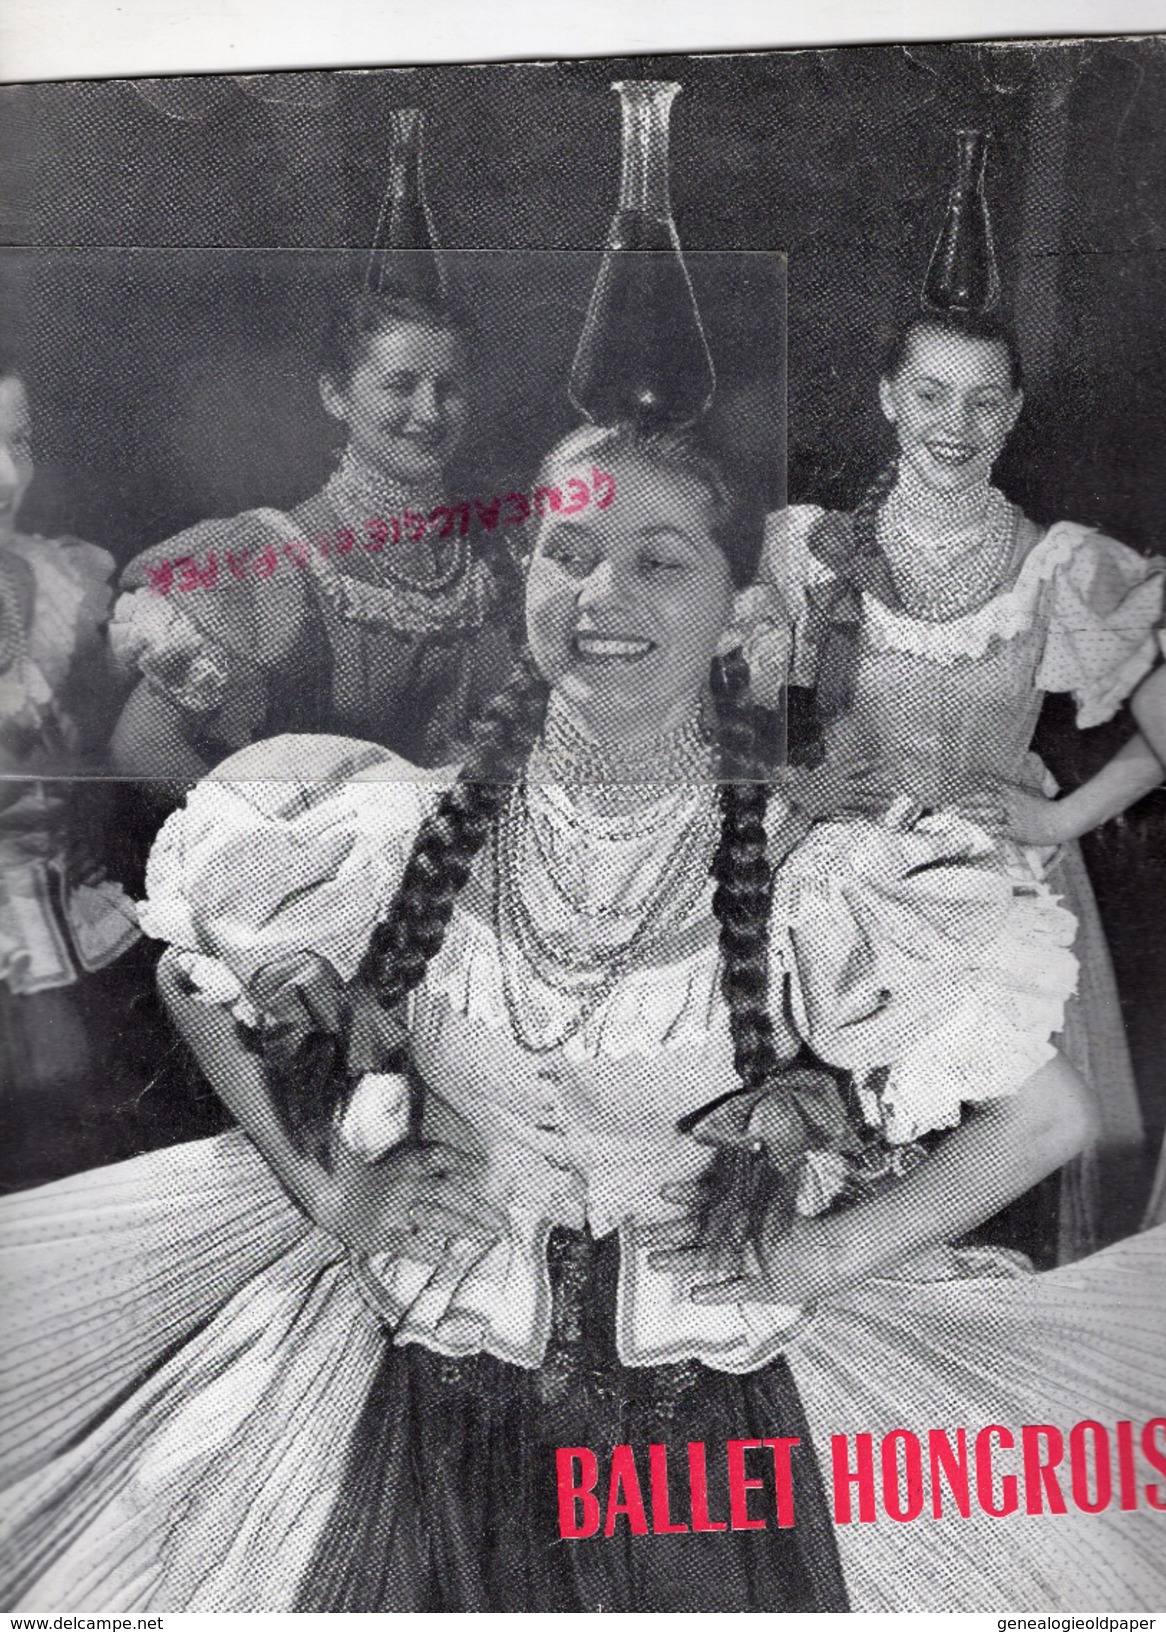 HONGRIE-BALLET HONGROIS-1957-TZIGANE-REZSO VARJASI-MIKLOS RABAI-ISTVAN ALBERT-LASZLO GULYAS-GABOR BAROSS-RICCI RITZ - Programs